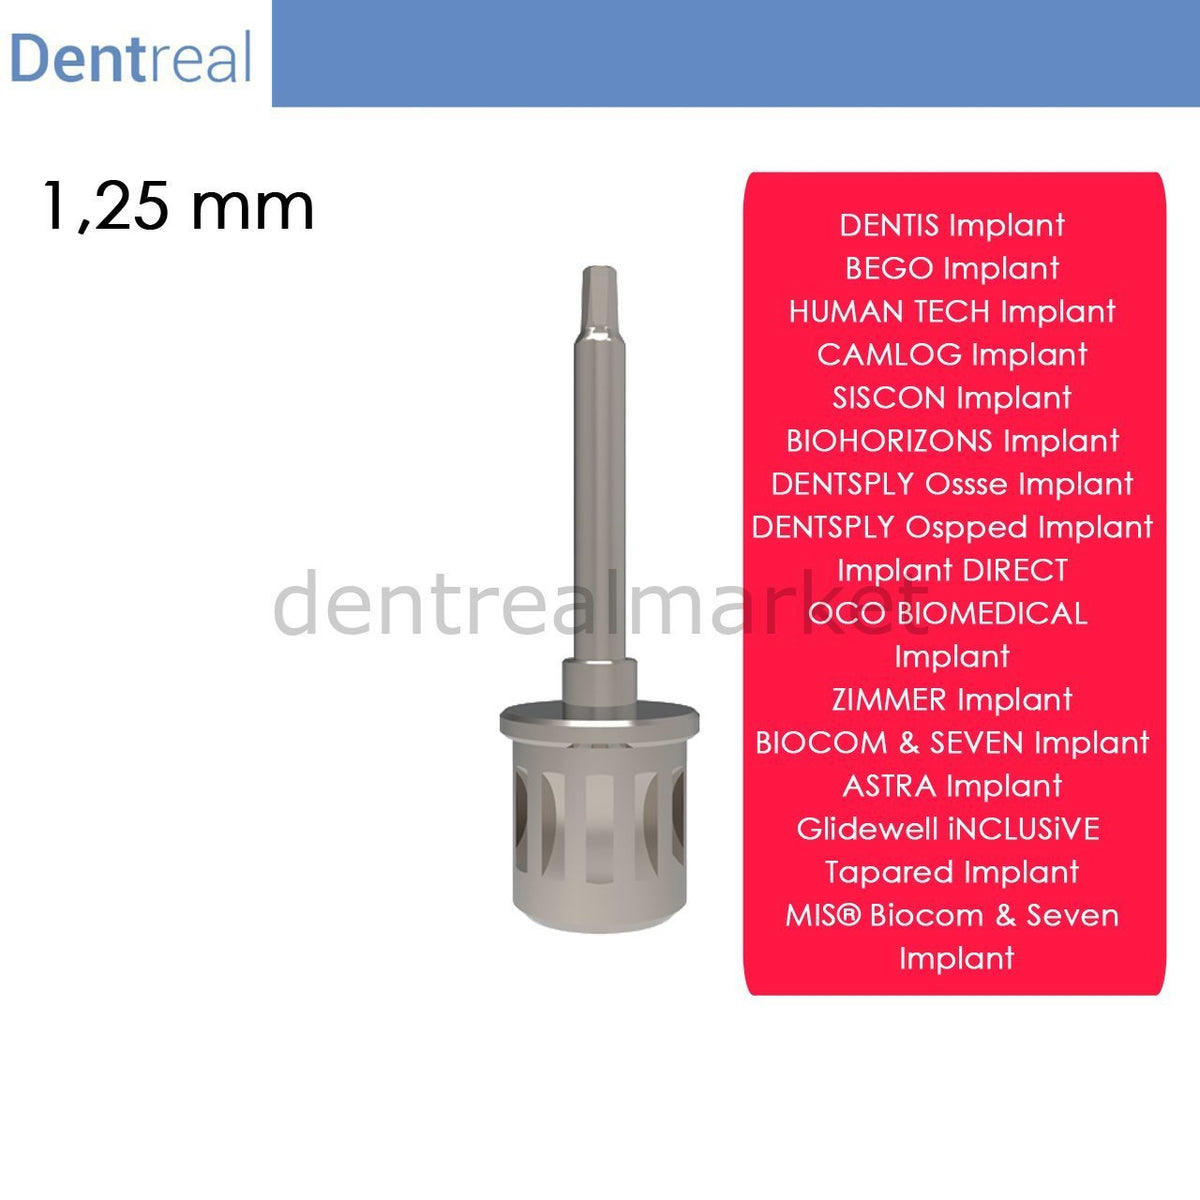 DentrealStore - Dentreal Screwdriver for Mis Biocom & Seven İmplant -1,25 mm Hex Driver